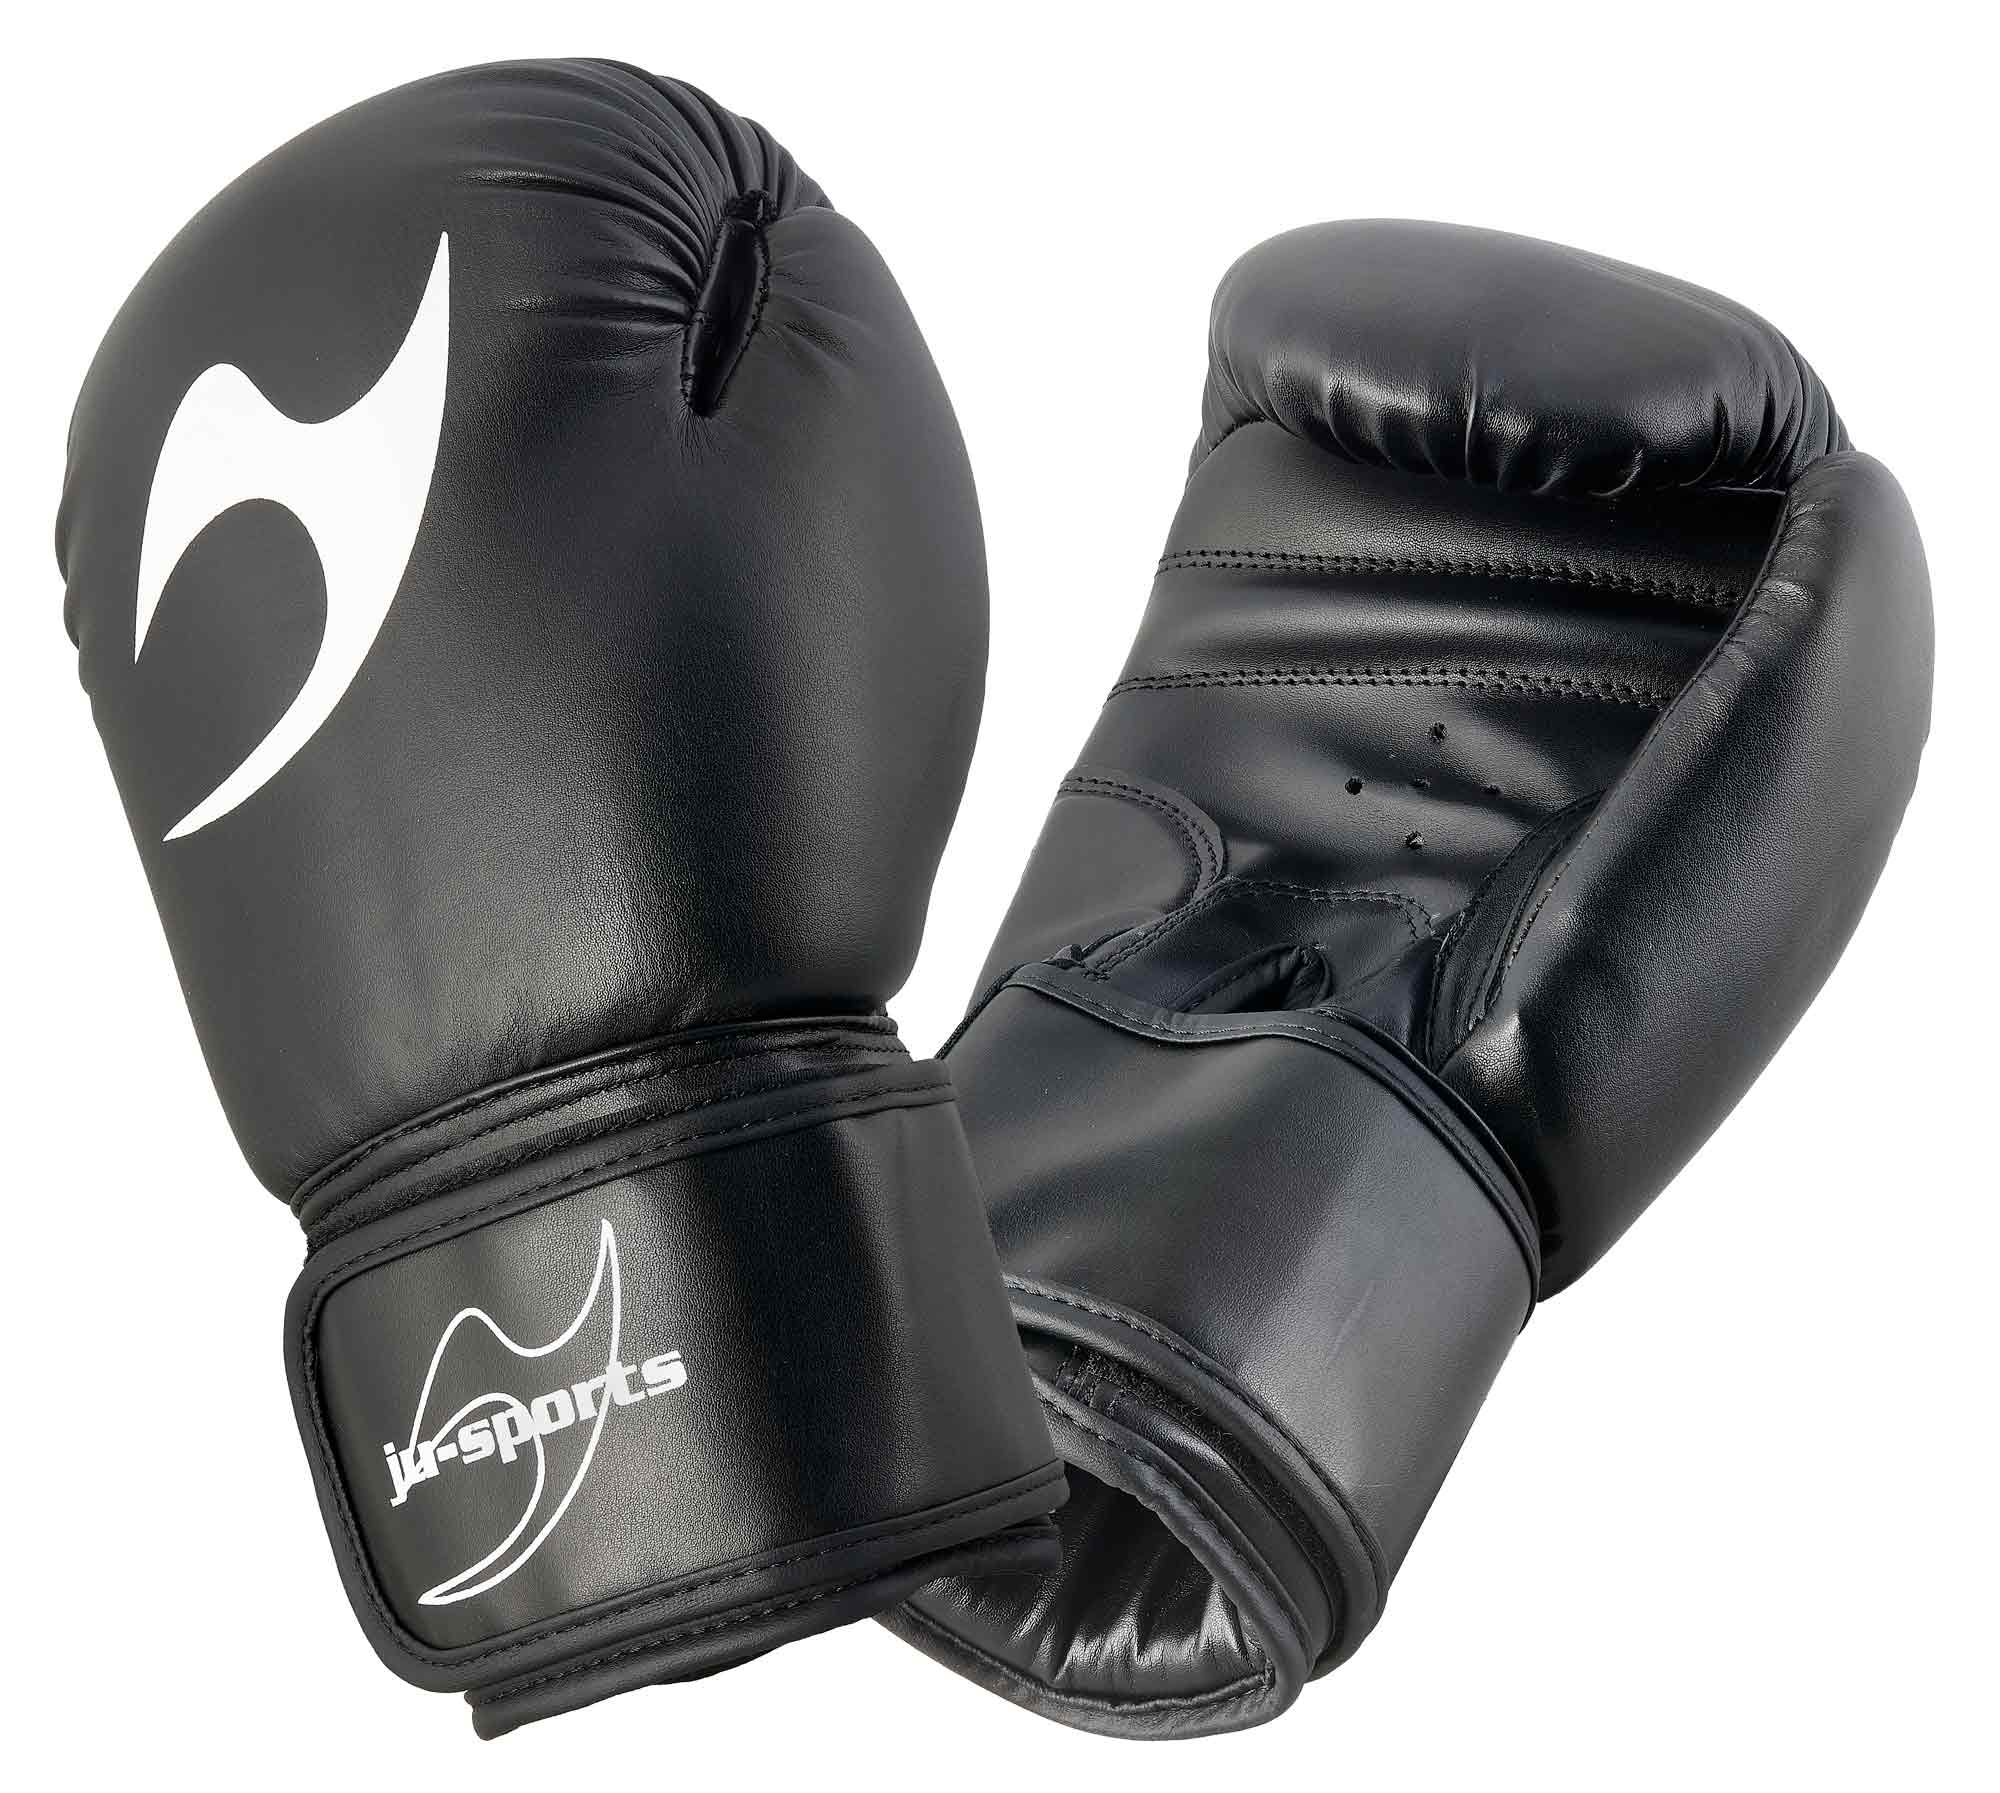 Ju-Sports Boxing Gloves Training black